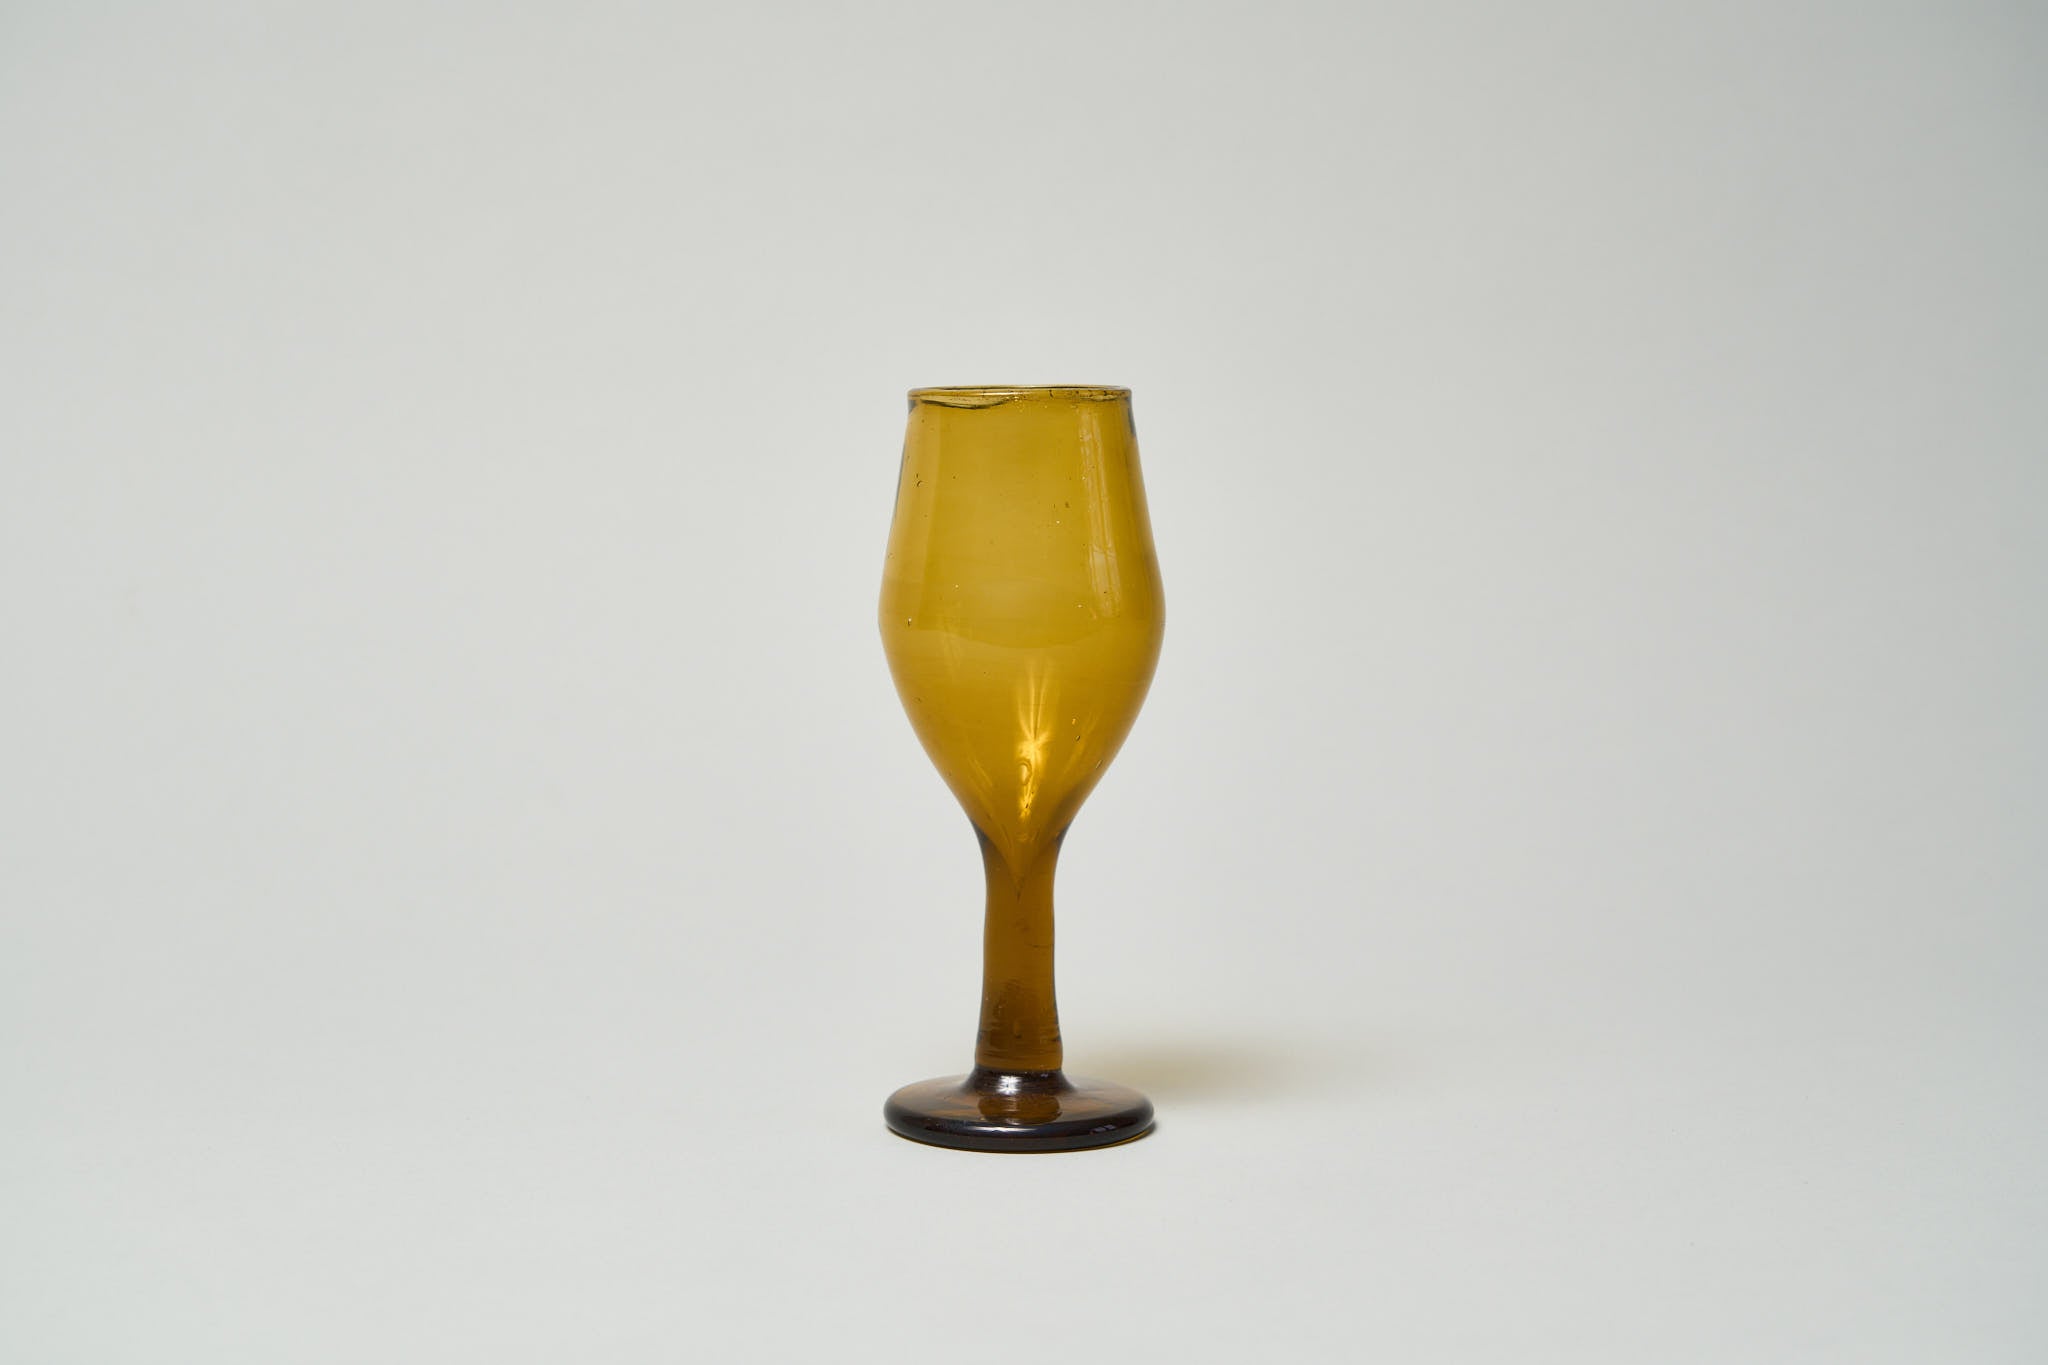 Wine Glass - Amber